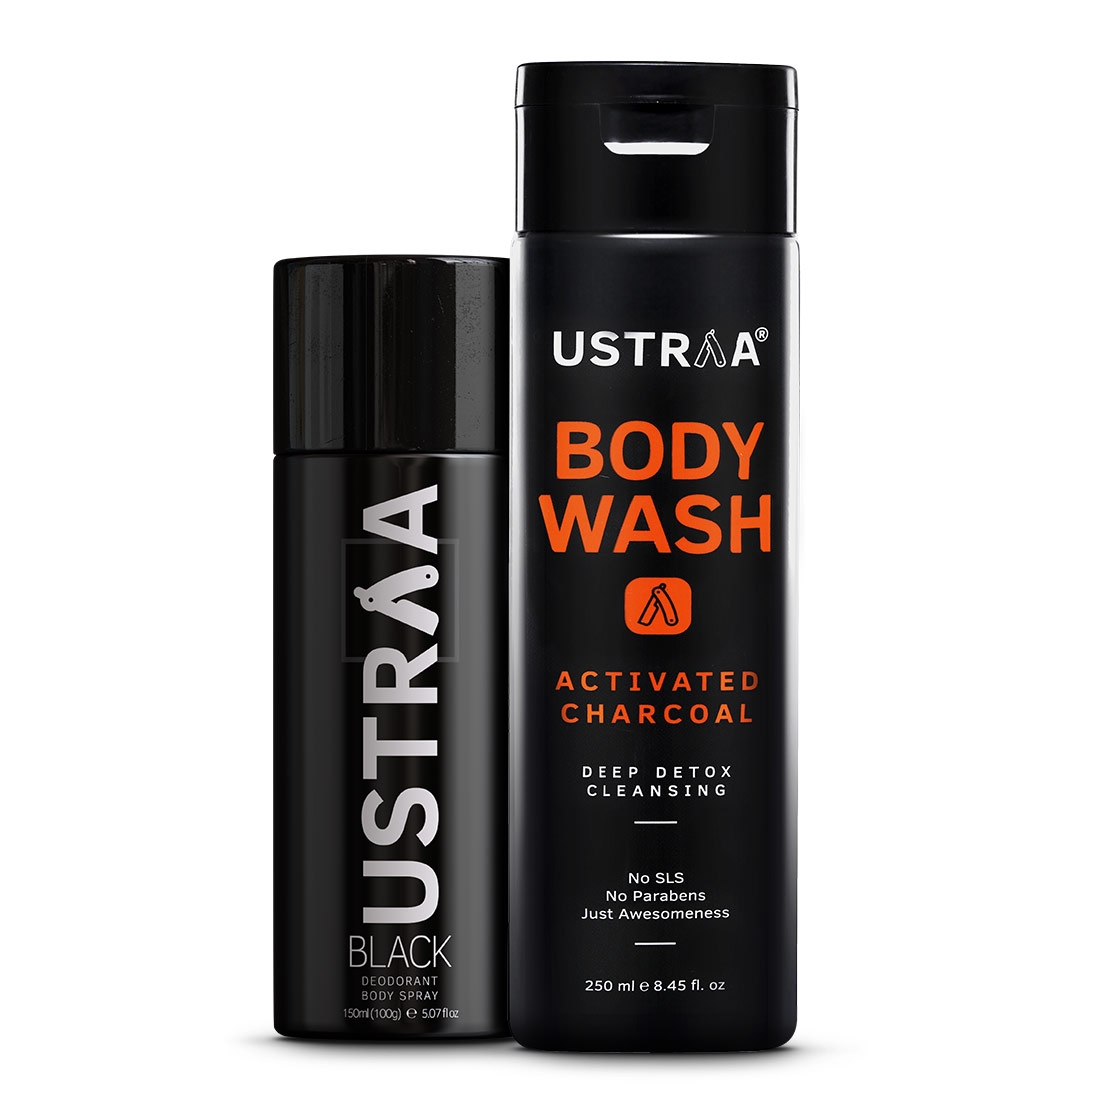 Ustraa Black Deodorant 150ml & Body Wash Activated Charcoal 250ml